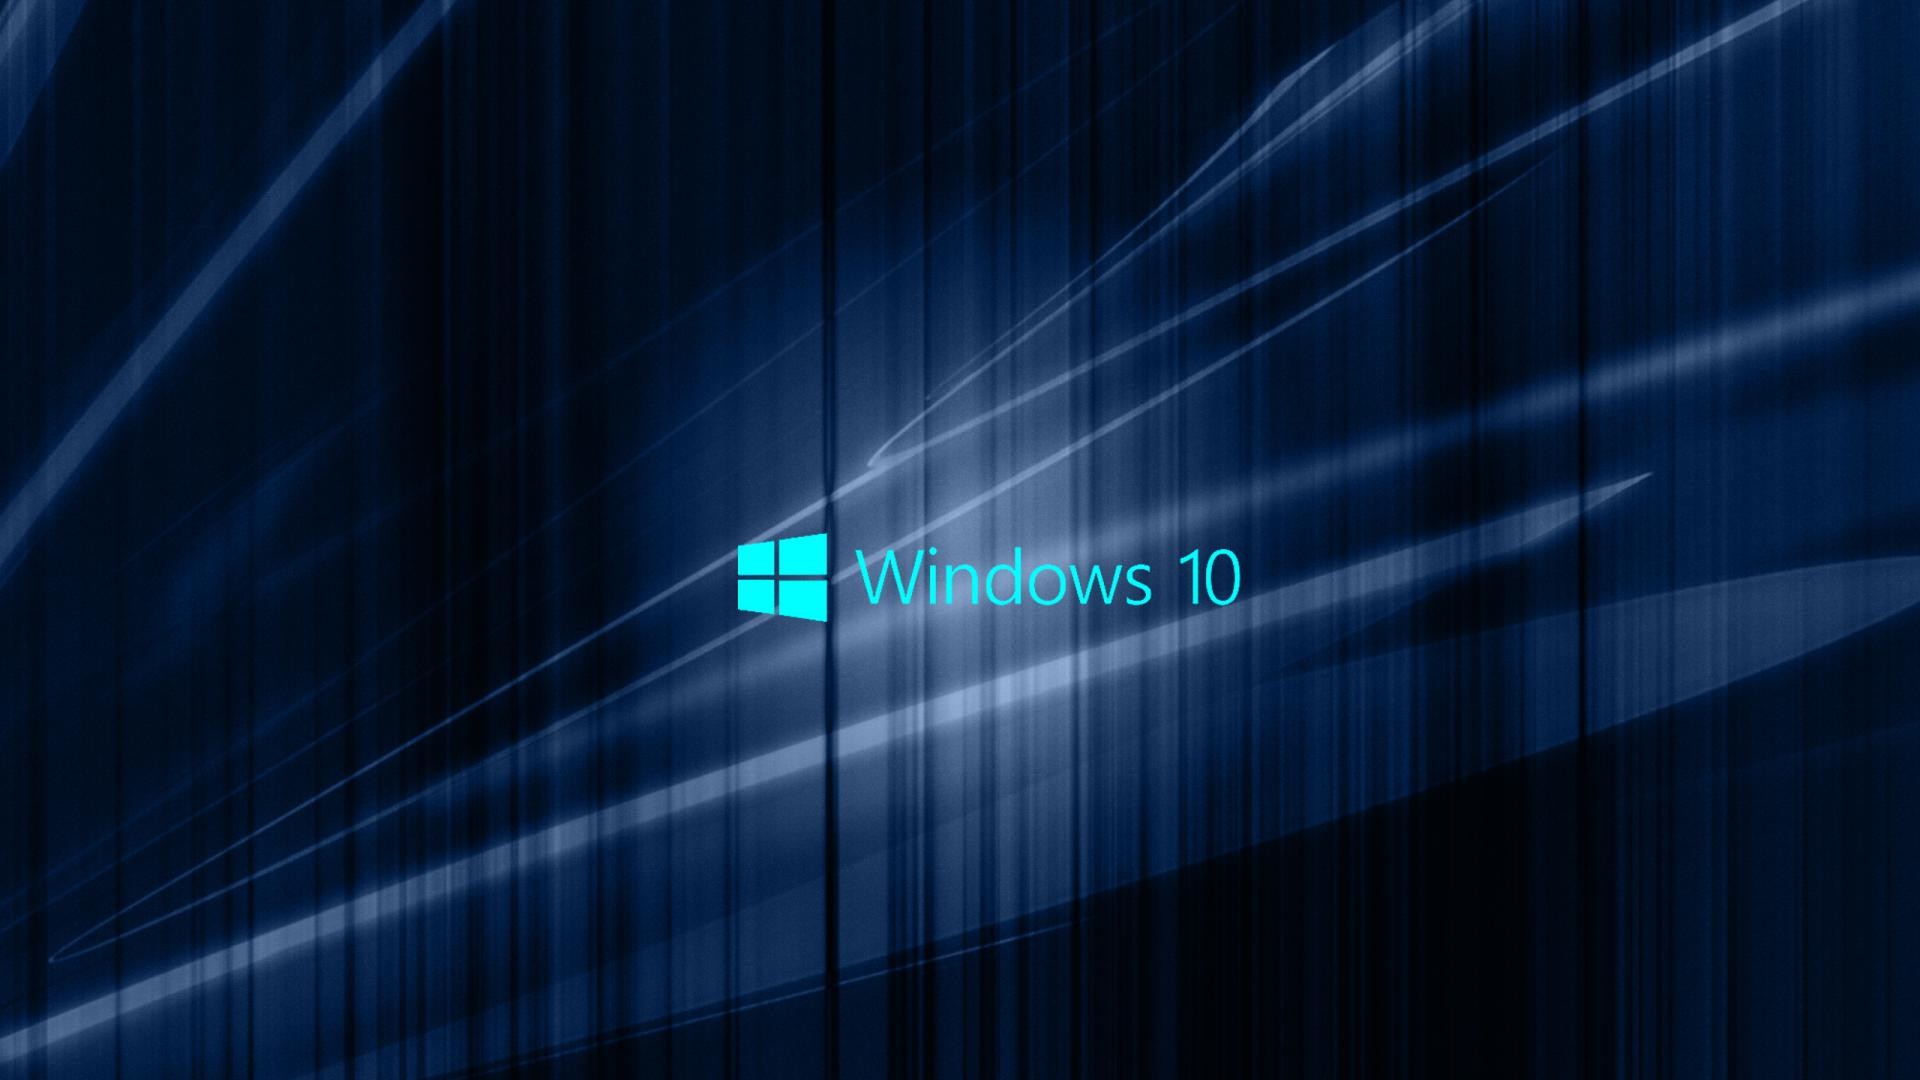 1920x1080 0 WindowsWallpaper WindowsWidescreen Full HD Quality Wallpapers, WindowsHD